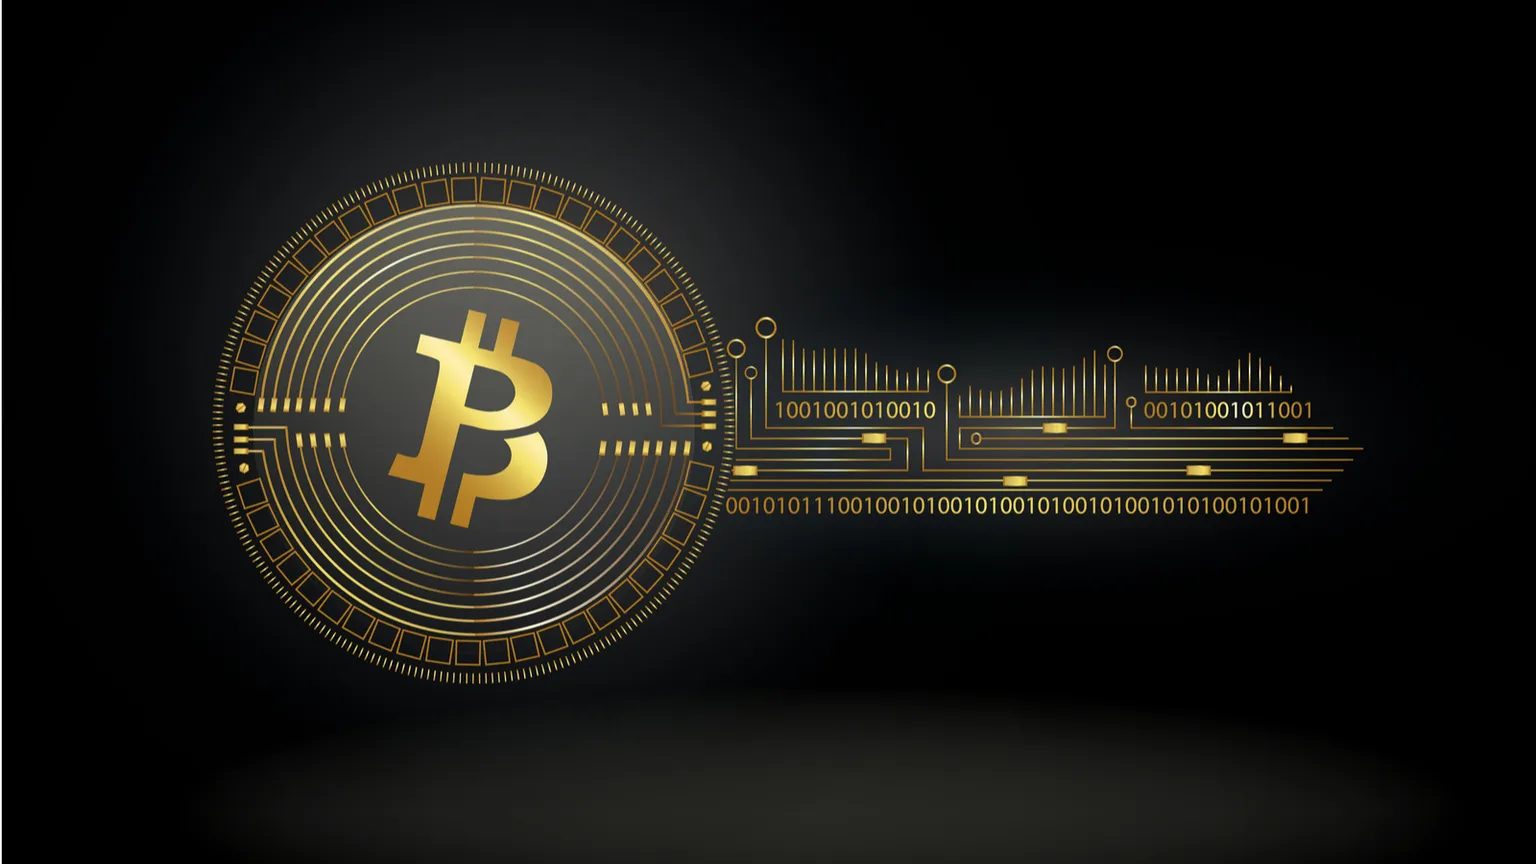 Digital image of bitcoin